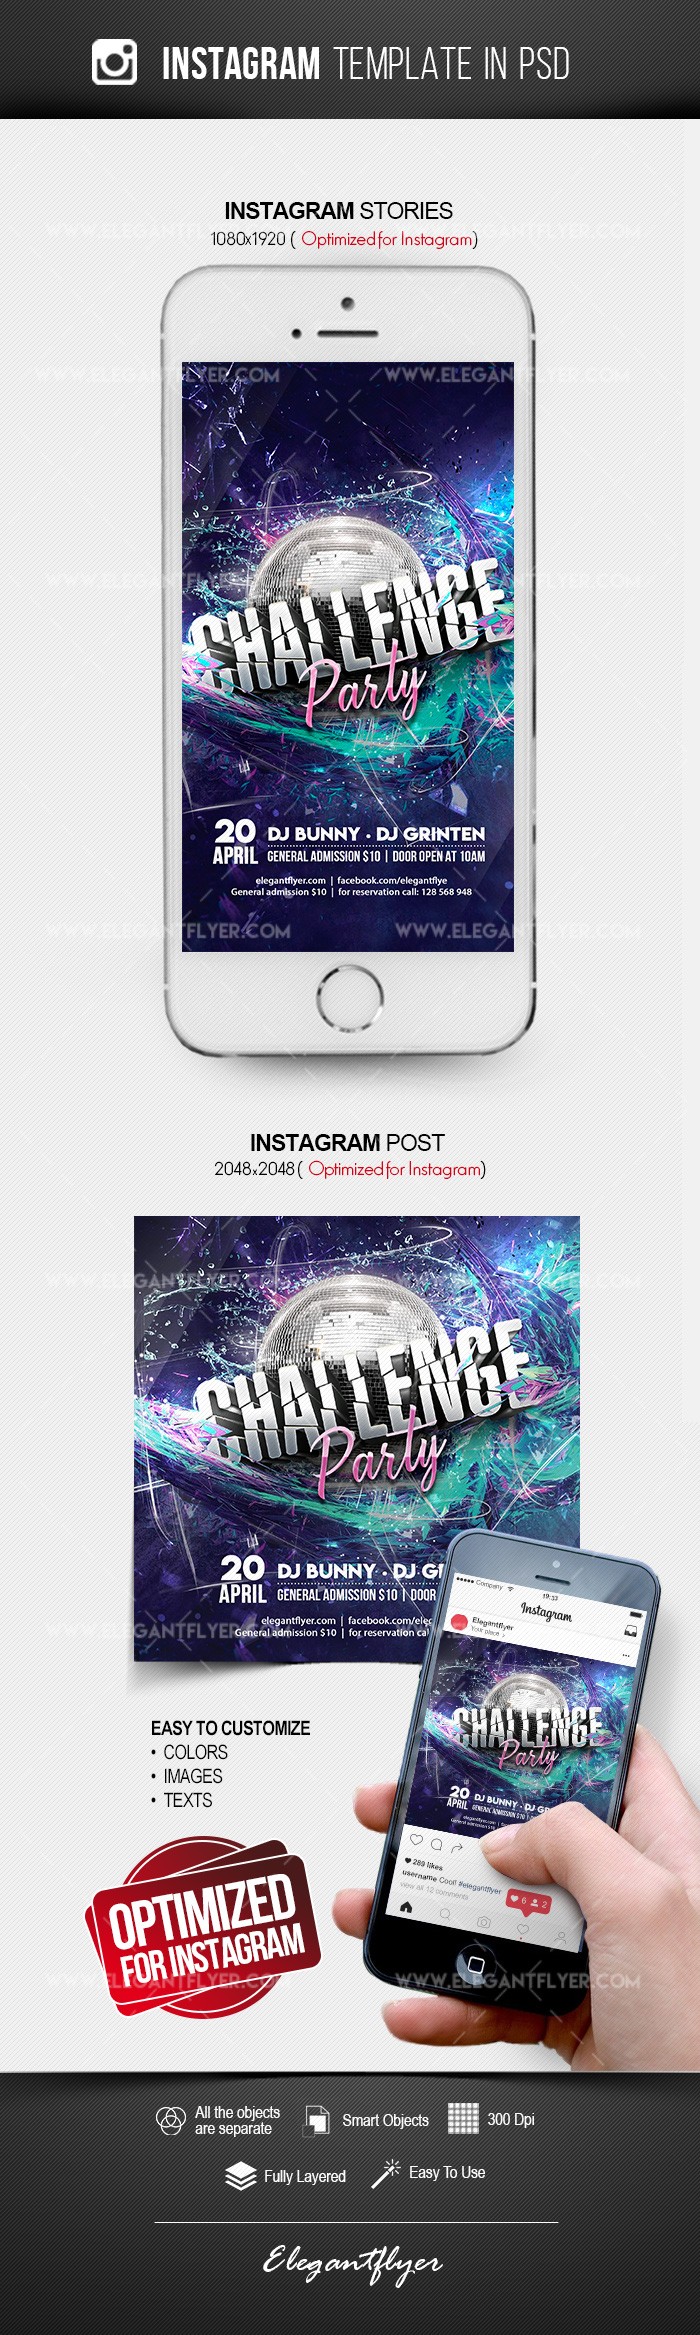 Challenge Party Instagram by ElegantFlyer